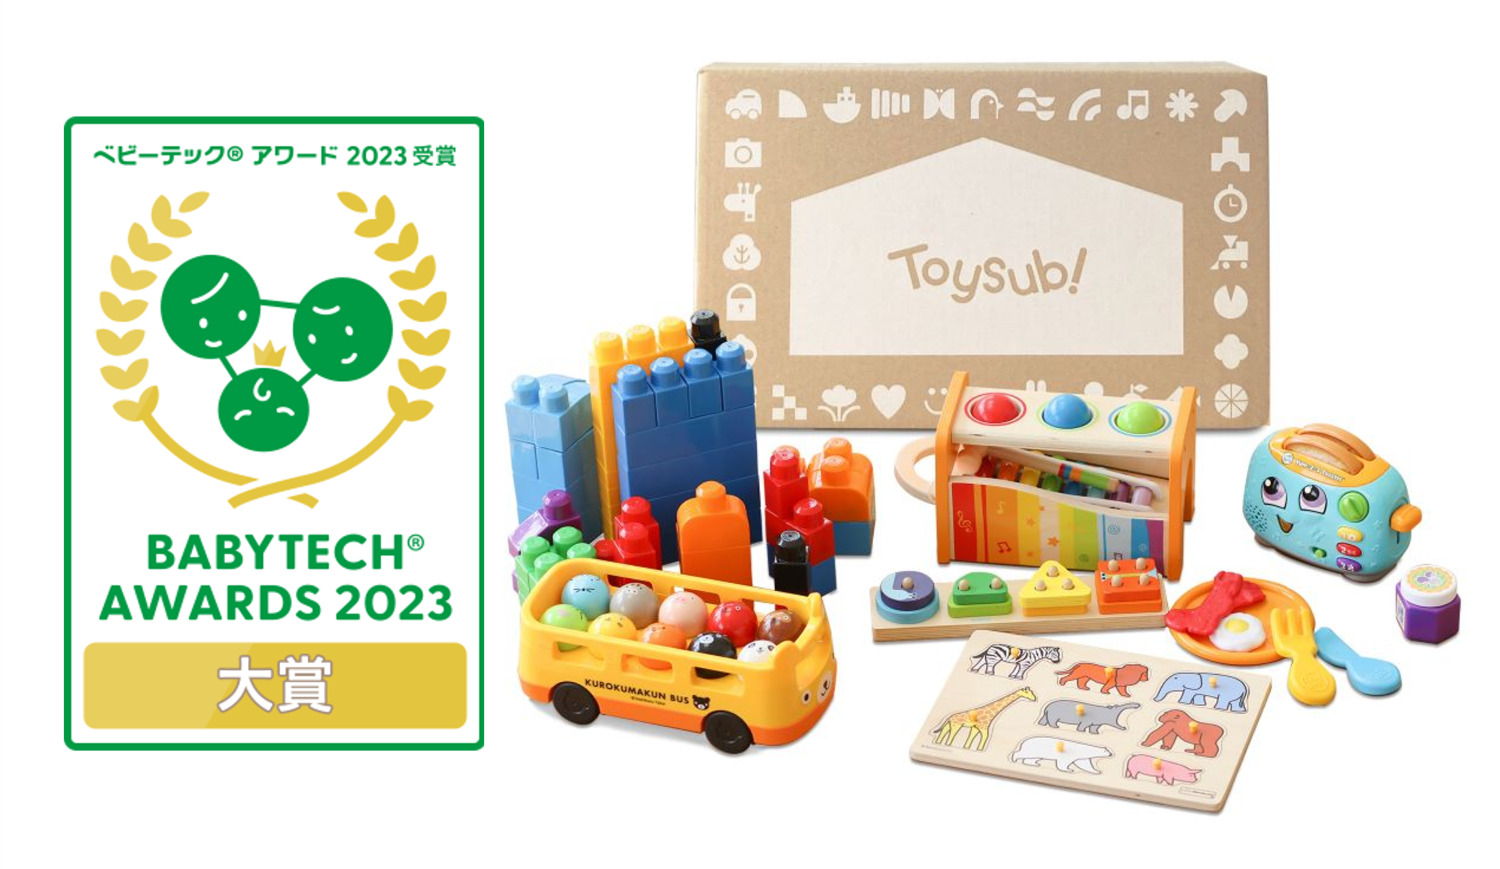 「BabyTech(R) Awards 2023 子どもの遊びと学び部門」にて、トイサブ！が大賞を受賞